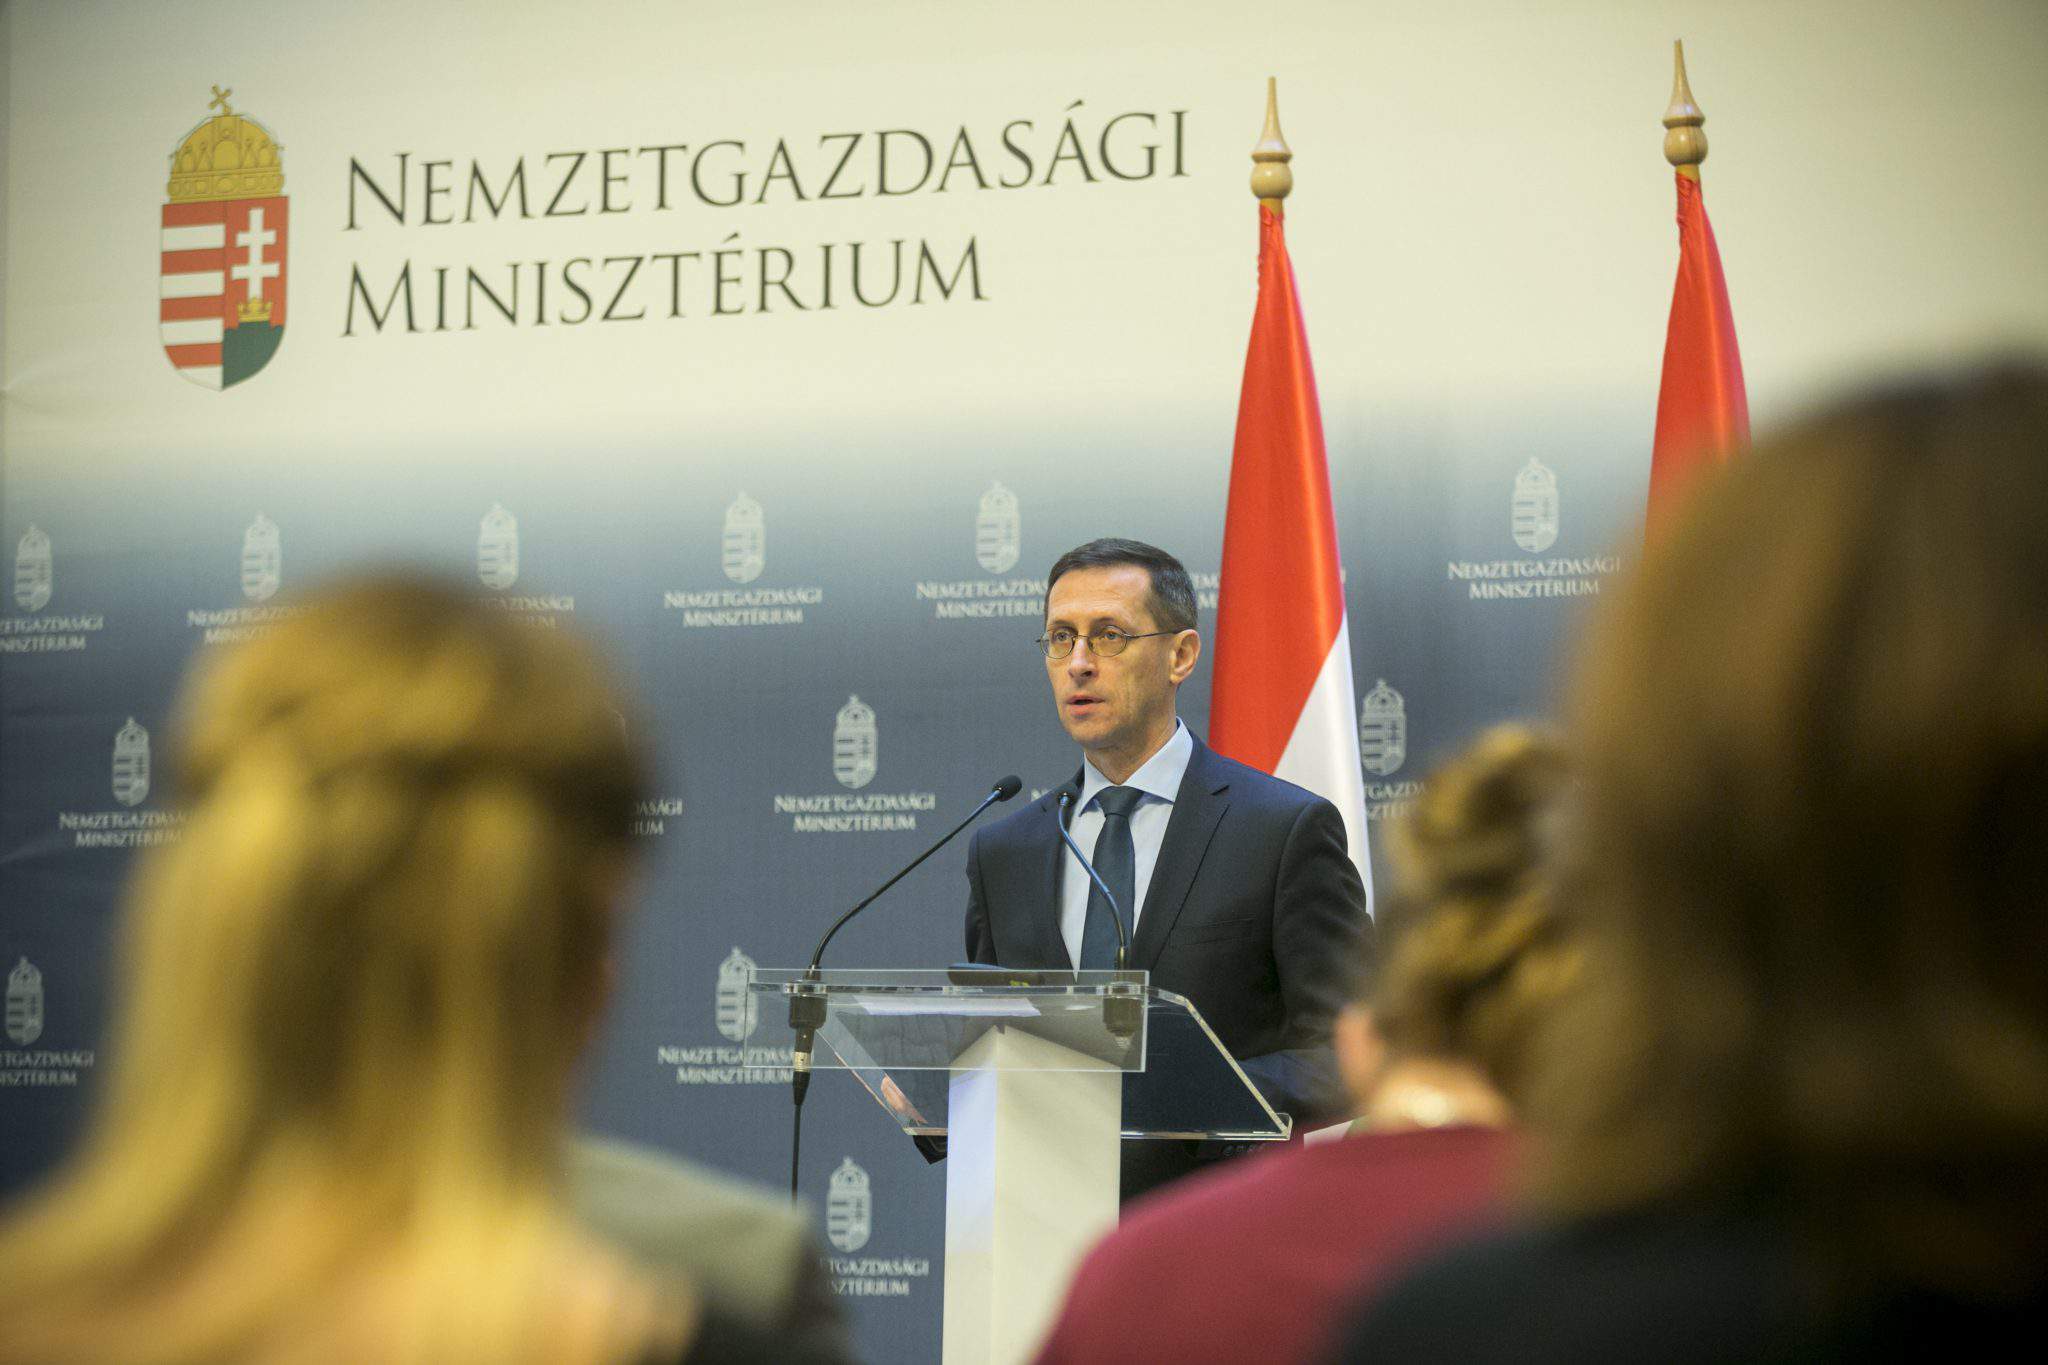 Hungary economy minister Varga